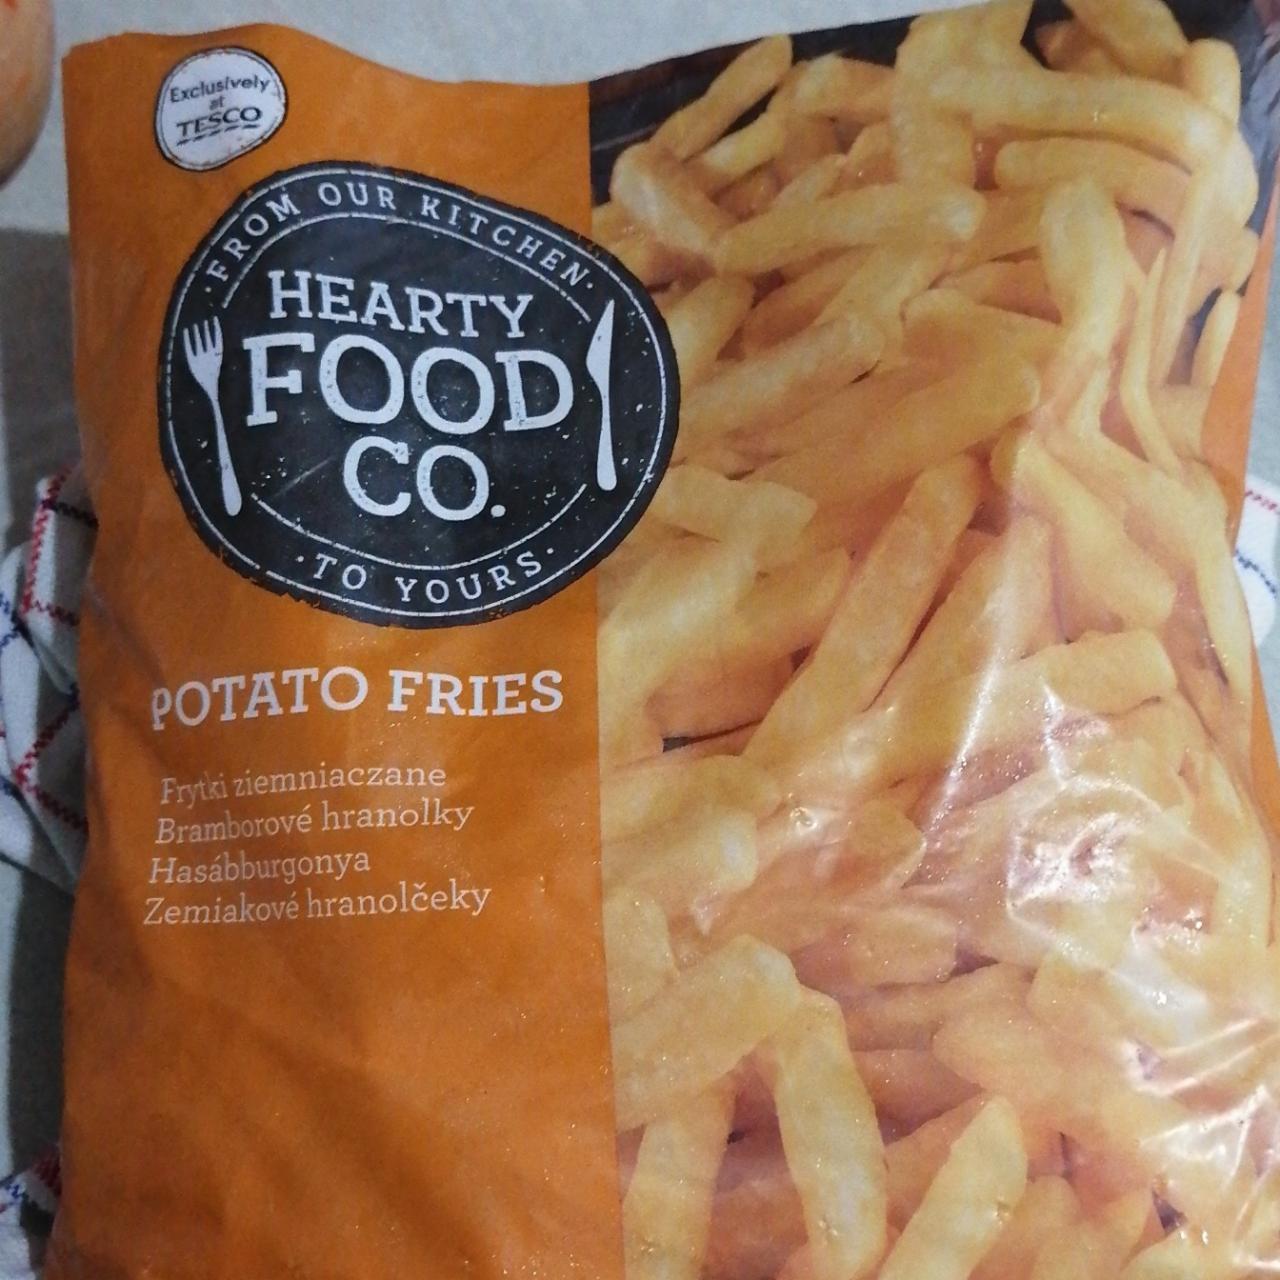 Képek - Potato Fries Hearty food Co.